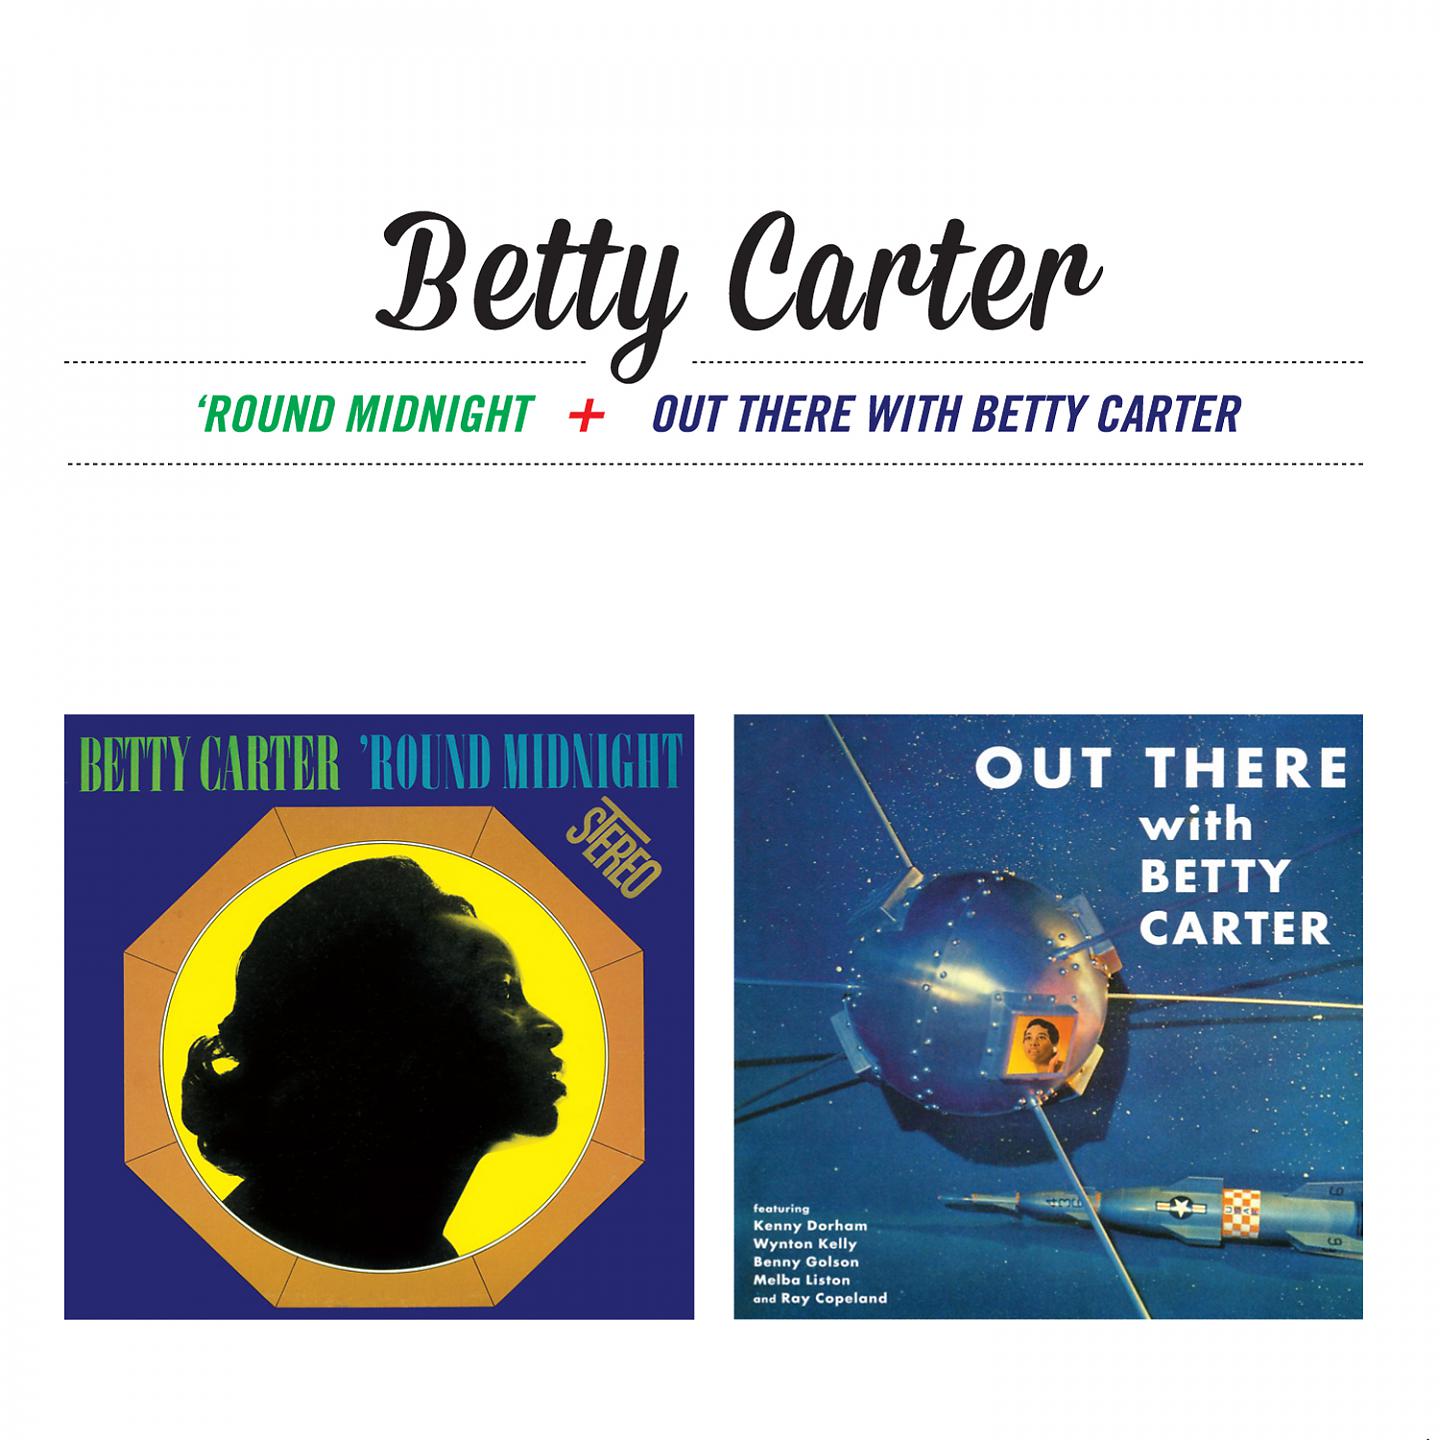 Around midnight. Бетти Картер. Betty Carter. Betty Carter "finally".